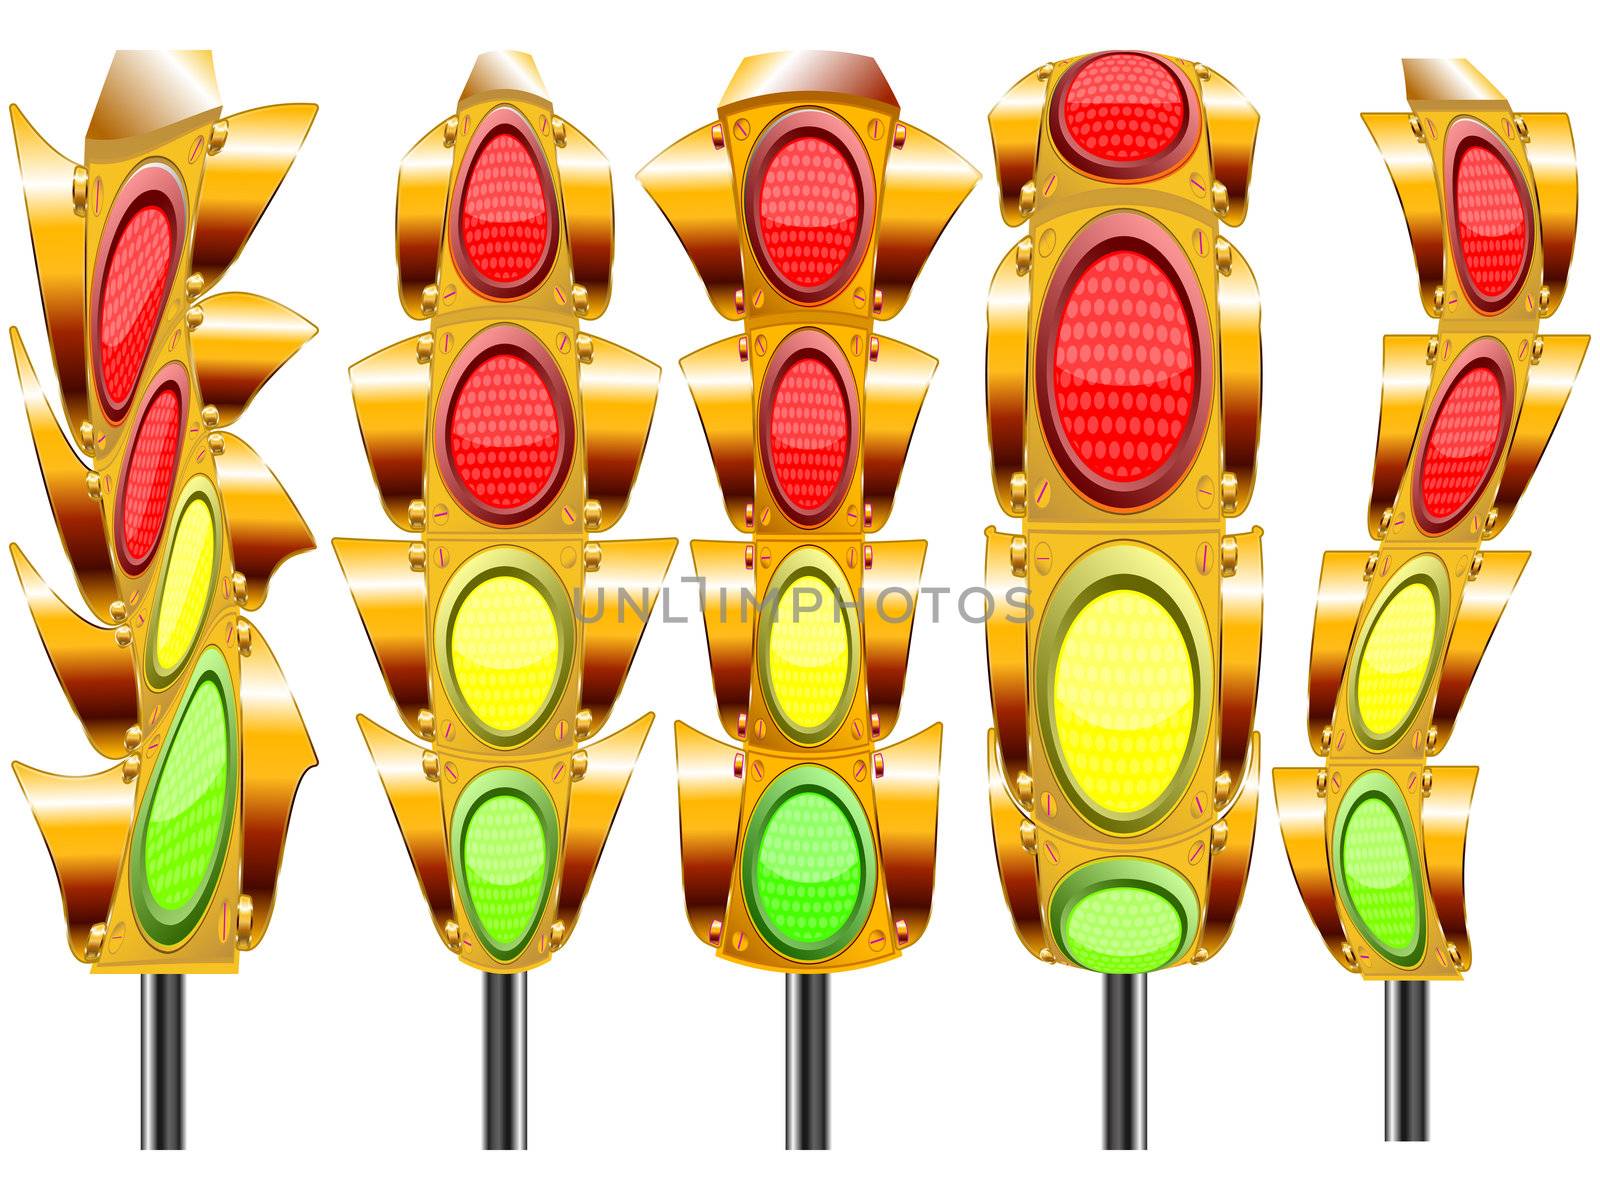 stylized traffic lights by robertosch